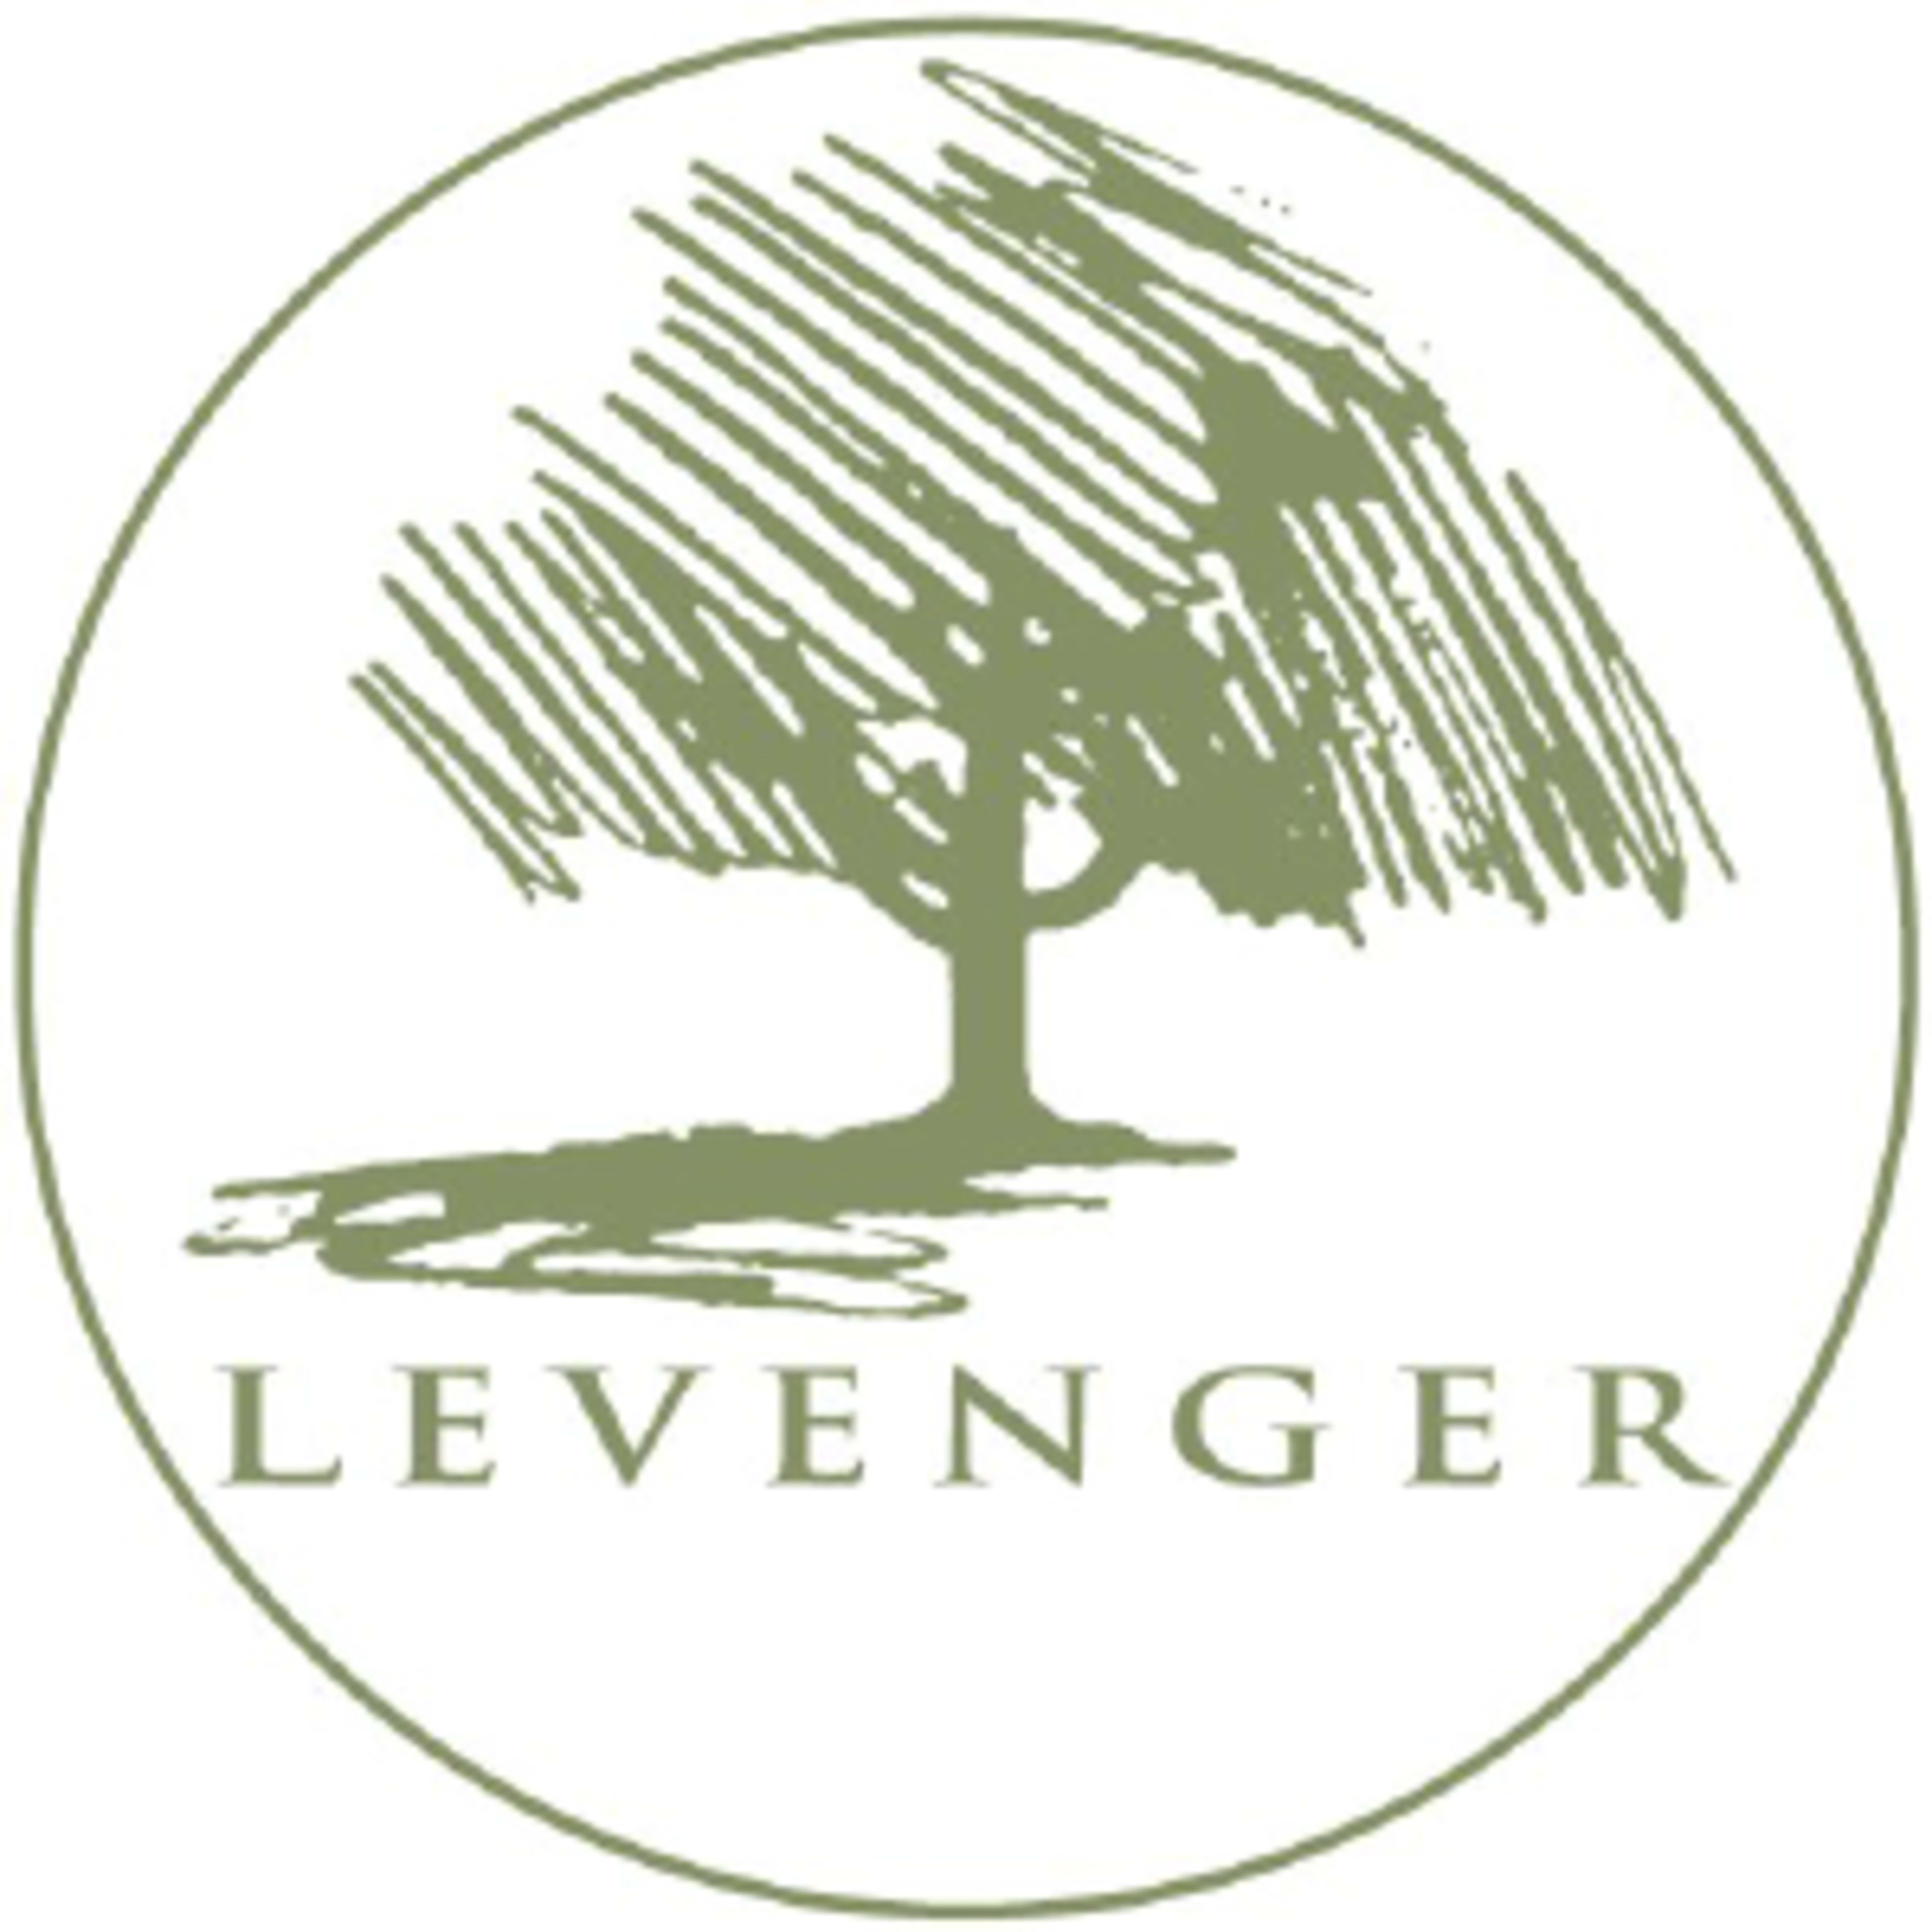 LevengerCode